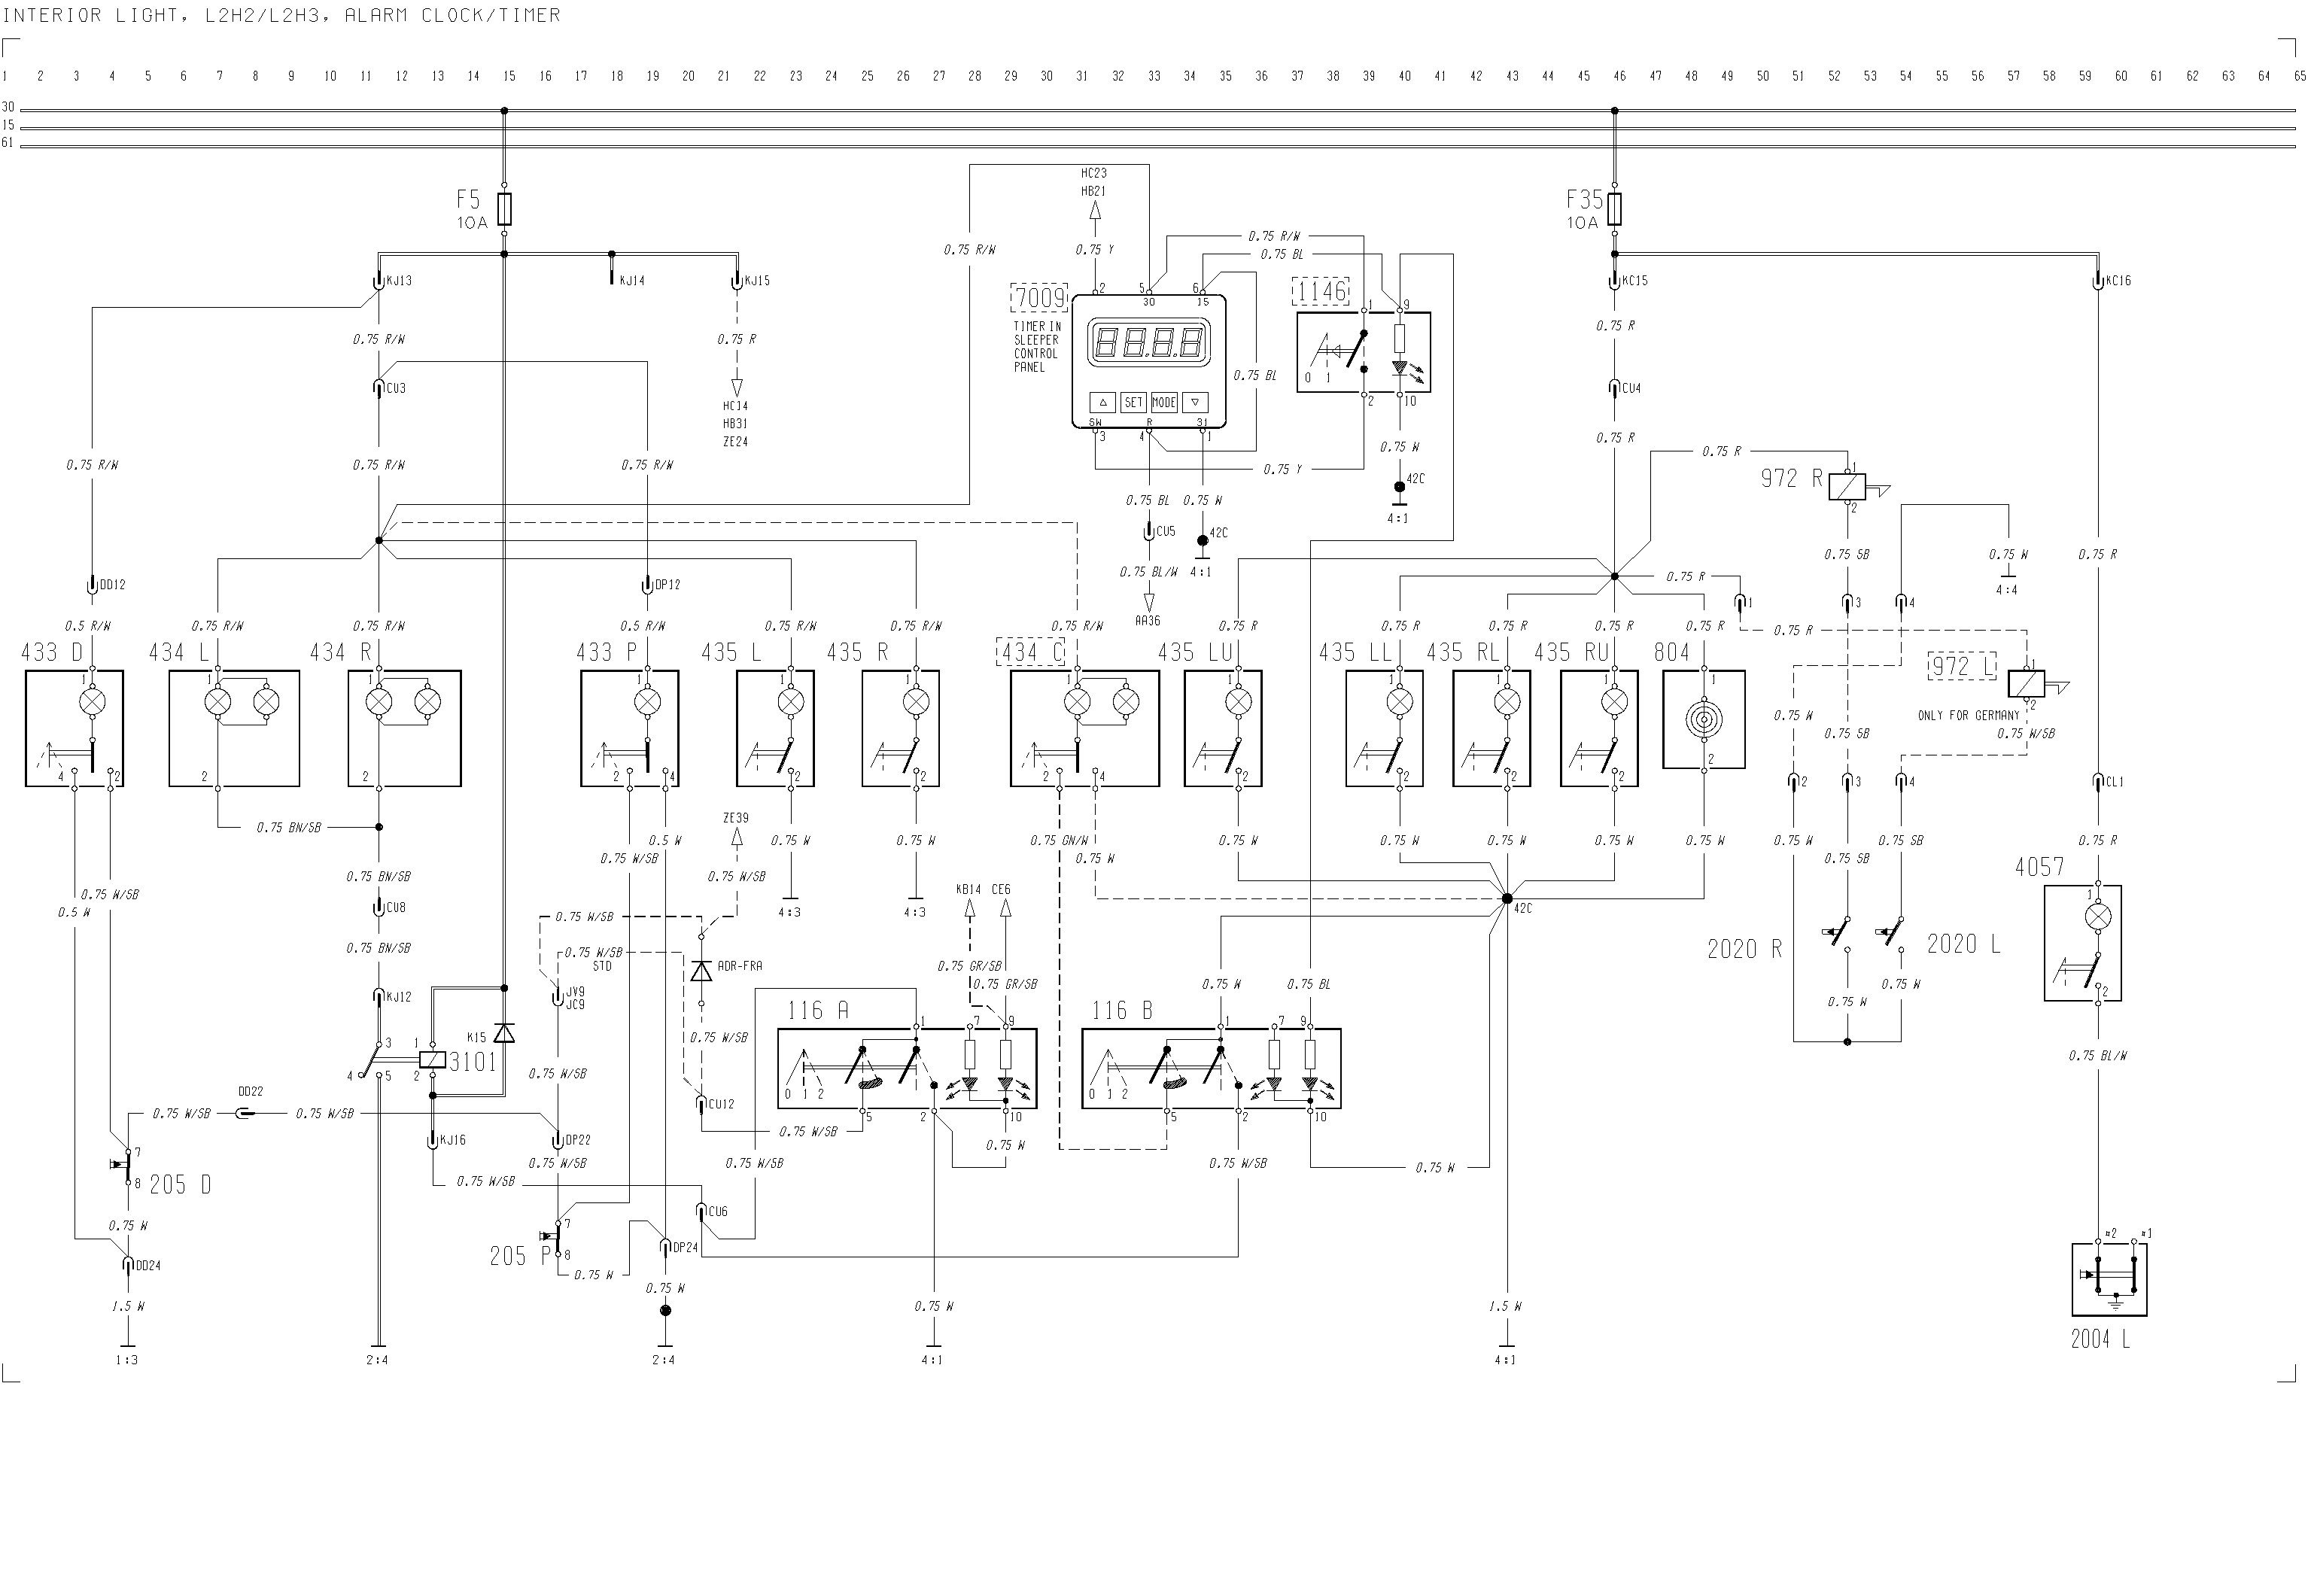 Volvo F12 F16 Wiring Diagram Interior Light L2h2 L2h3